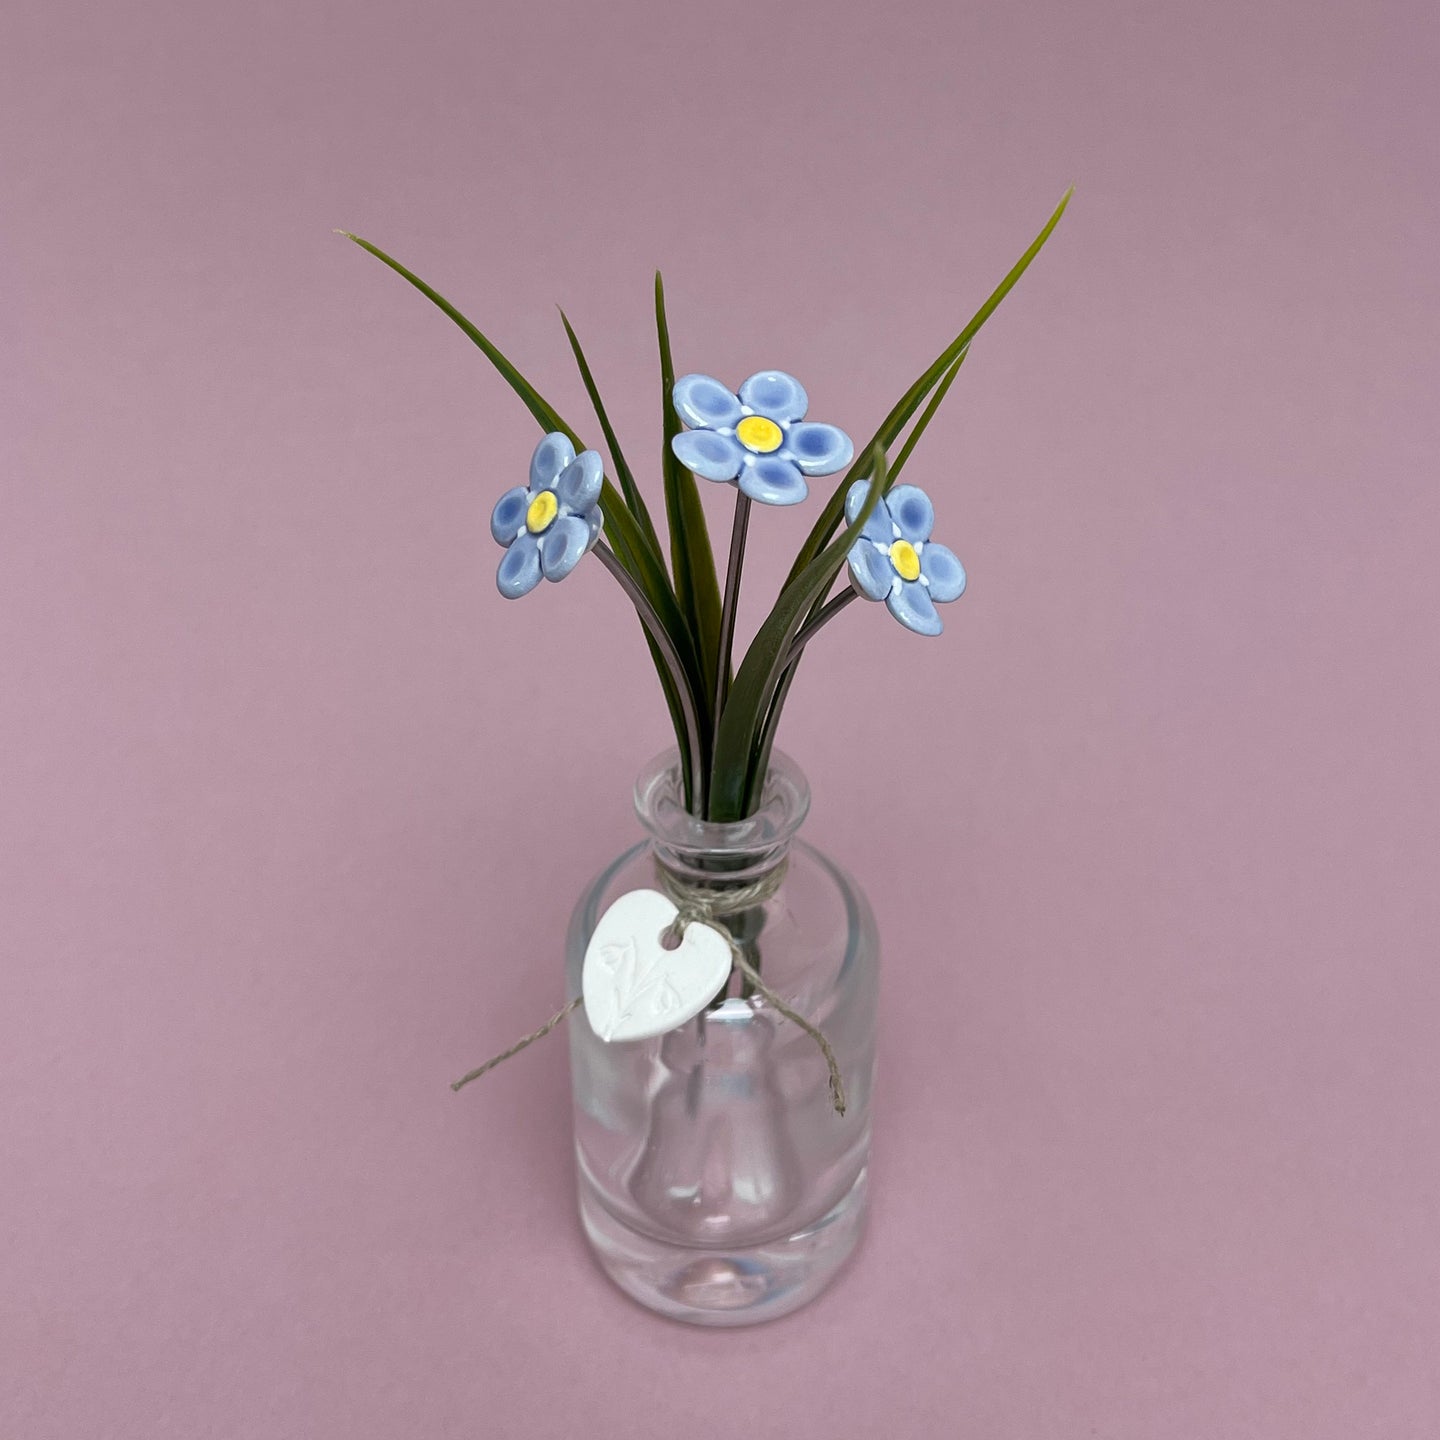 Triple ceramic flower in a bottle - forget-me-not